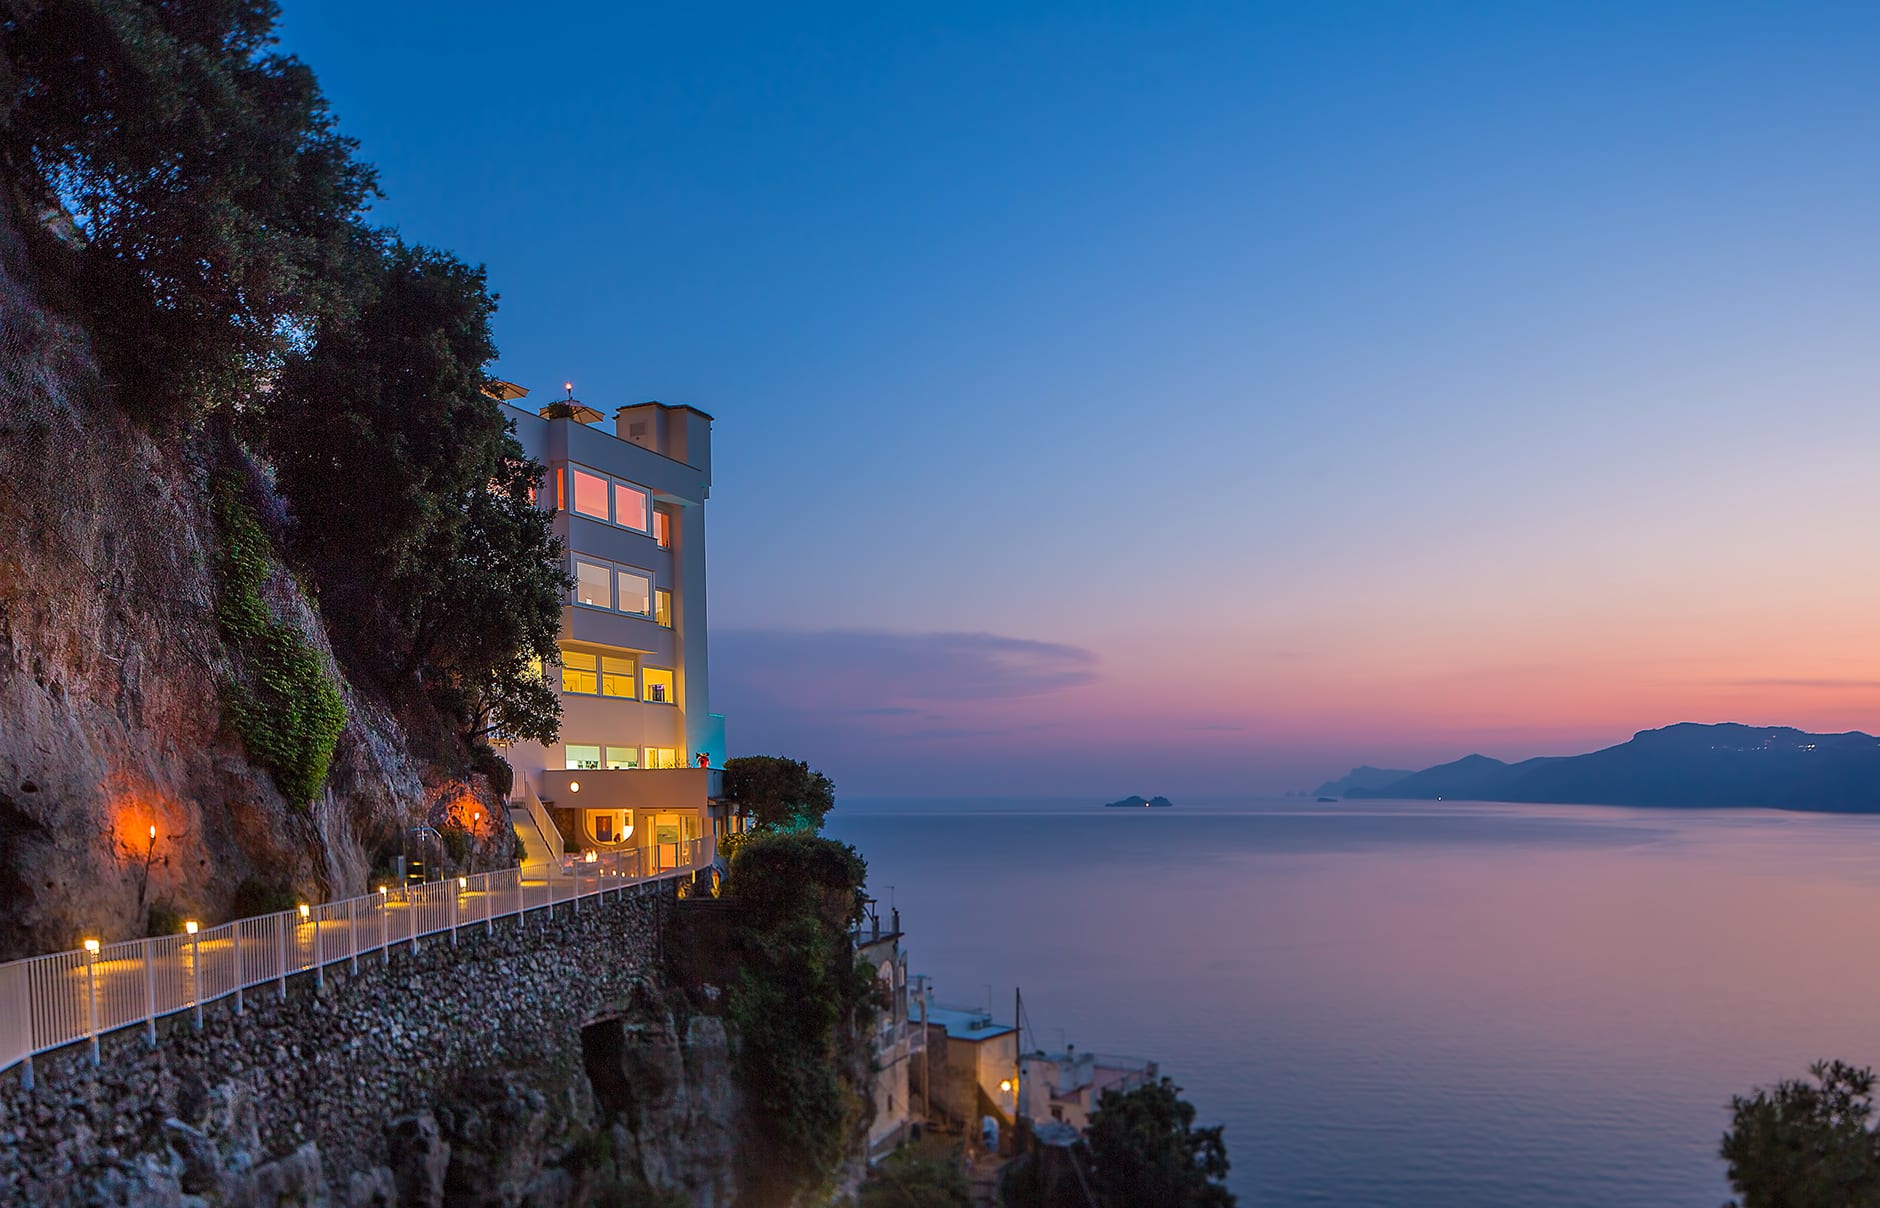 Casa Angelina, Amalfi Coast, Italy. Hotel Review by TravelPlusStyle. Photo © Casa Angelina Lifestyle Hotel 